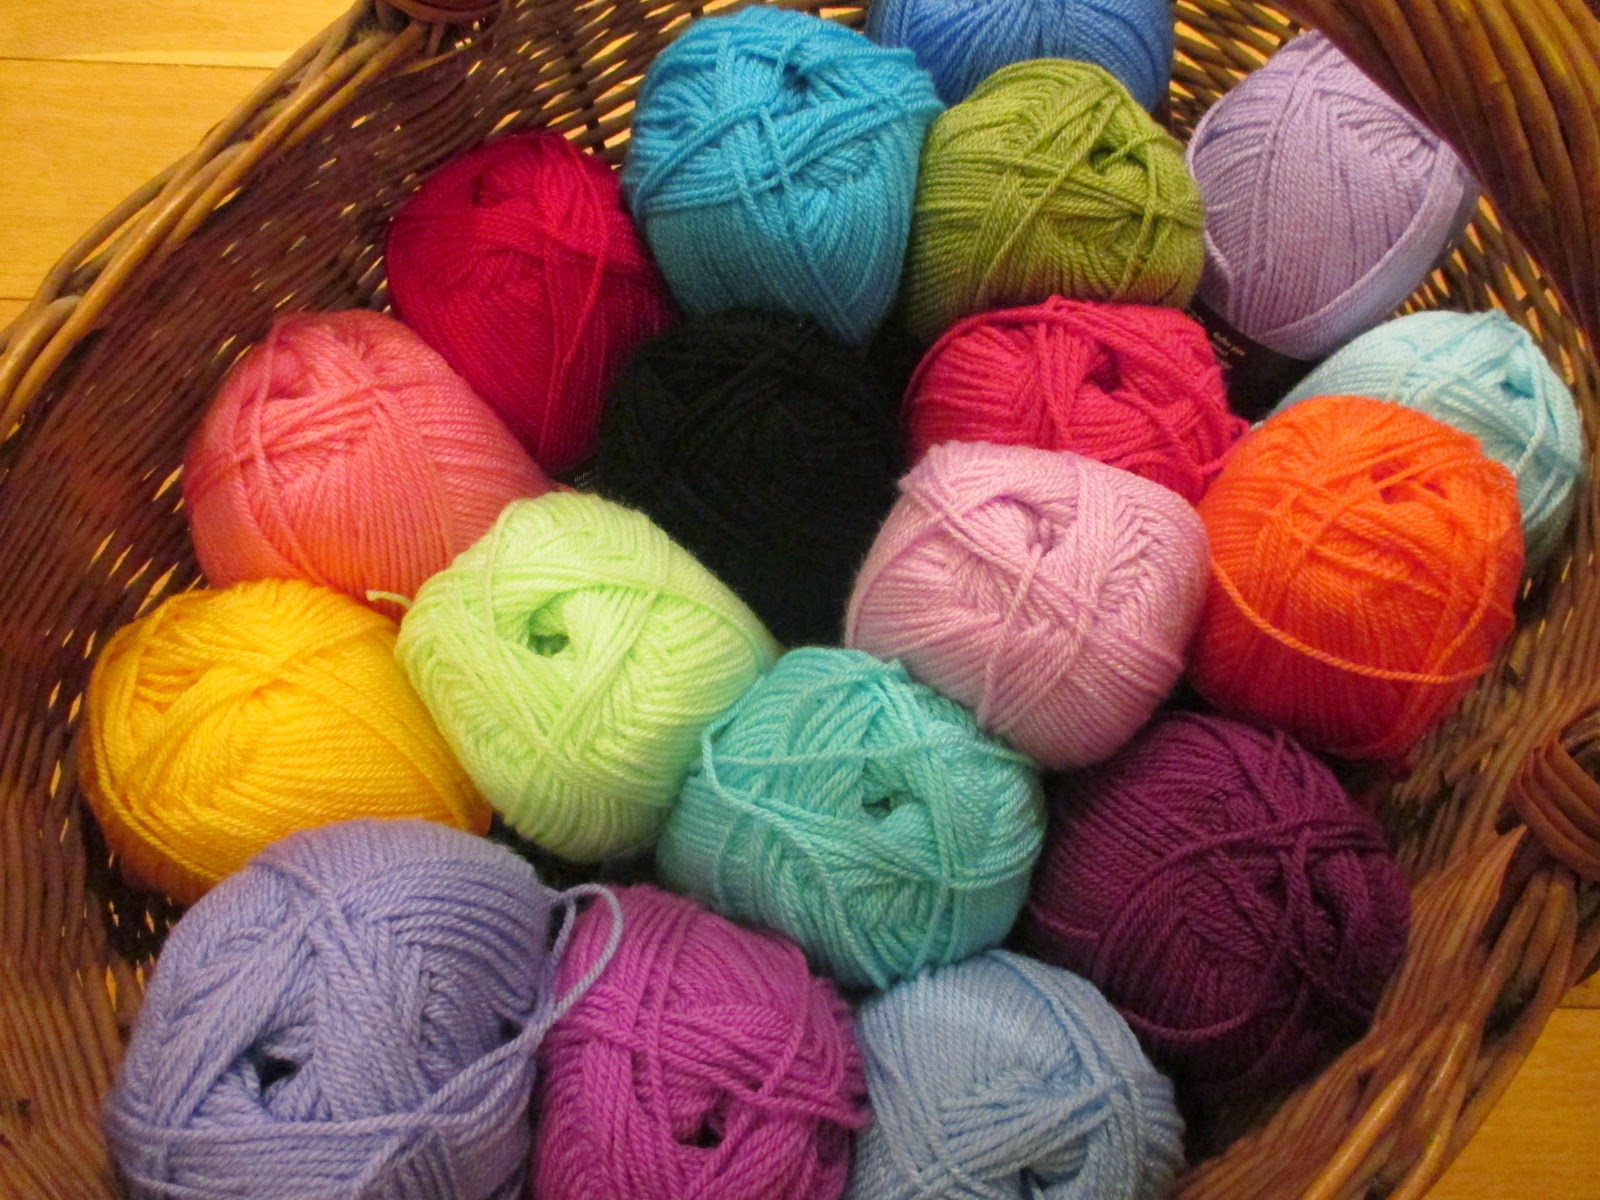 For the Love of Crochet Along: January 2015